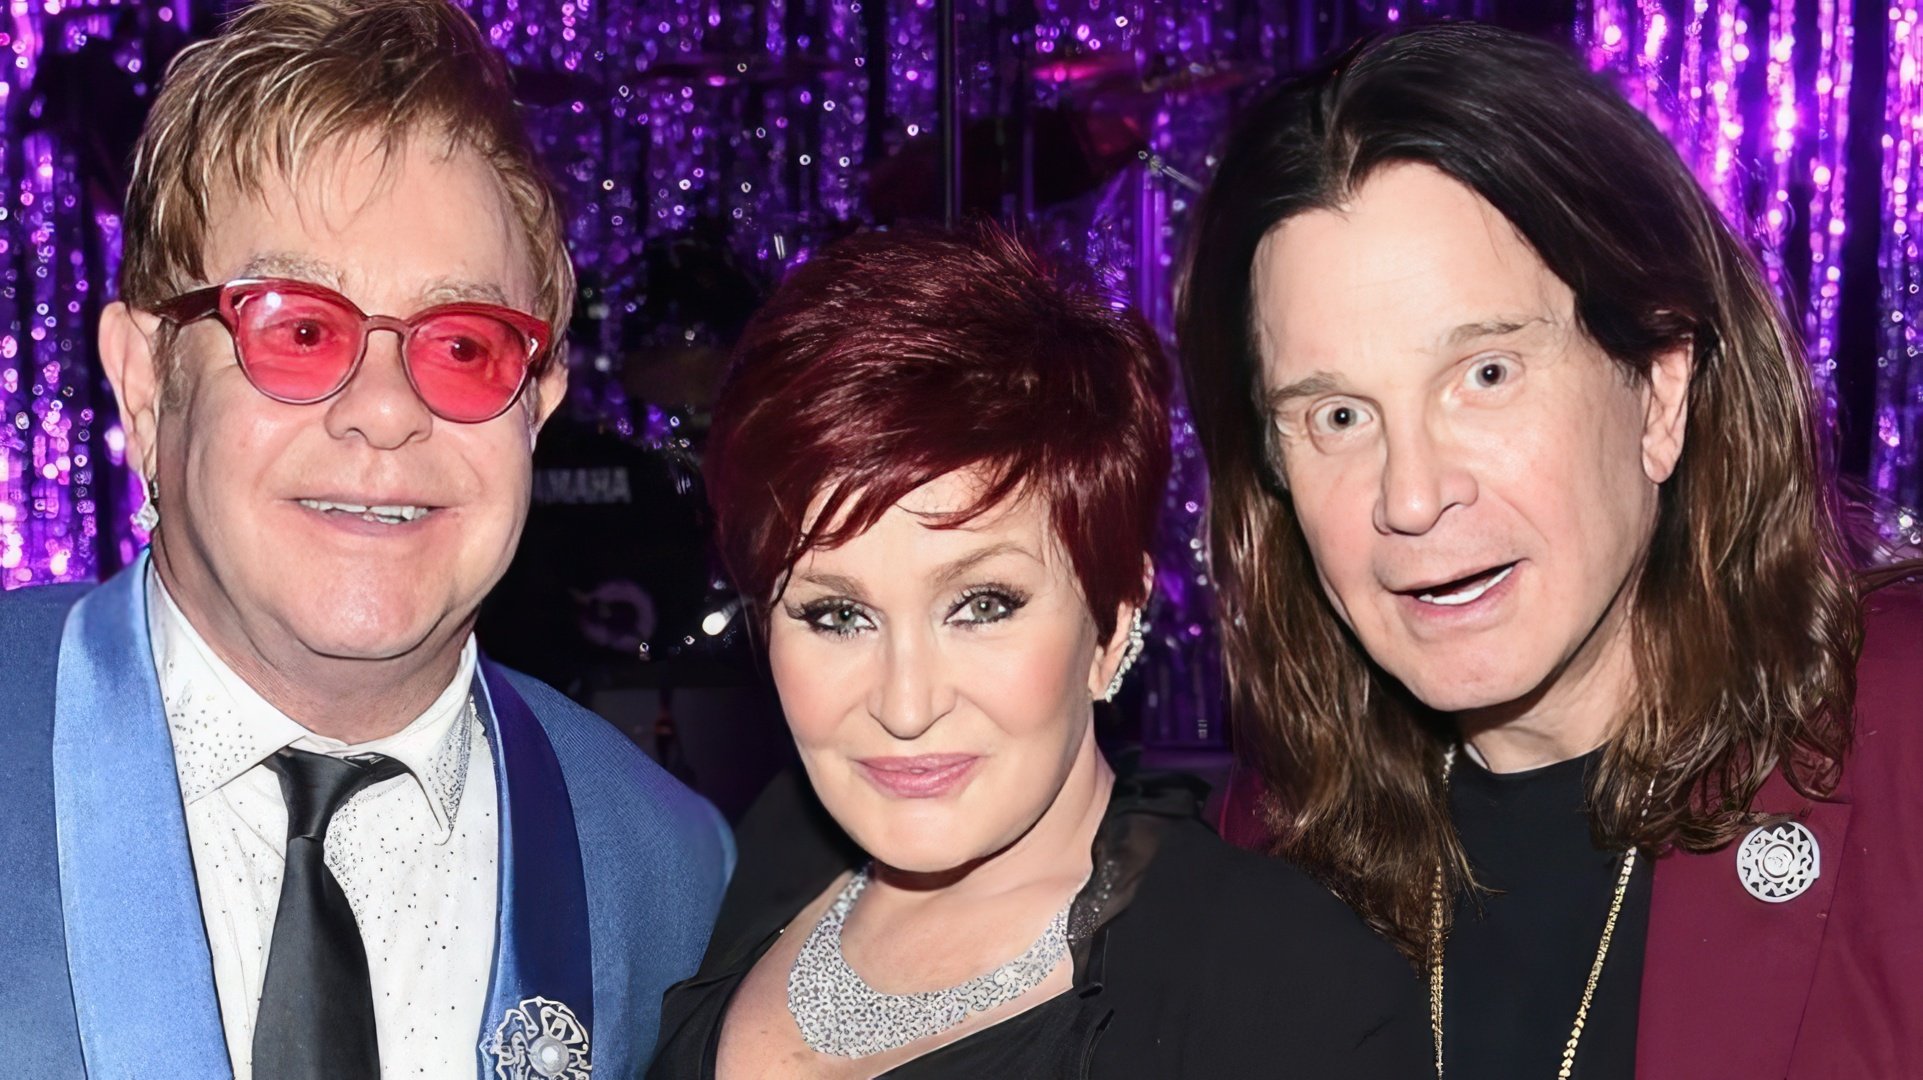 Ozzy Osbourne and Elton John sang a duet